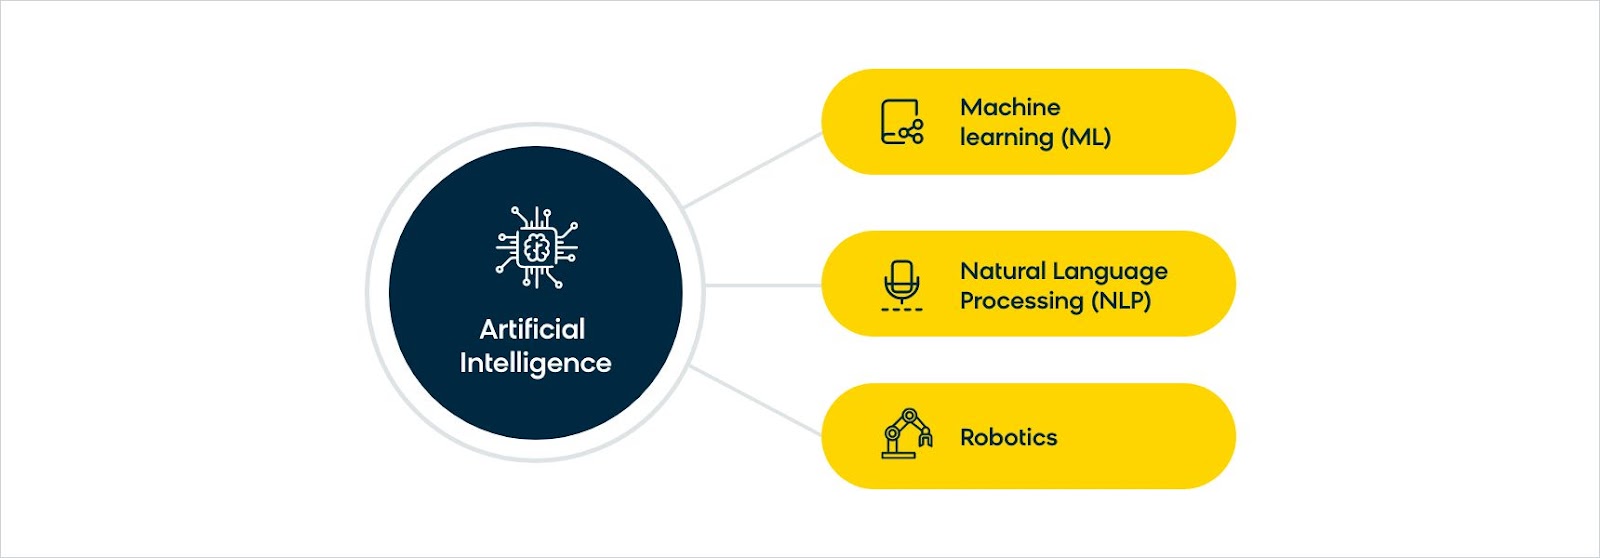 Three Main Branches of AI - ML, NLP, and Robotics